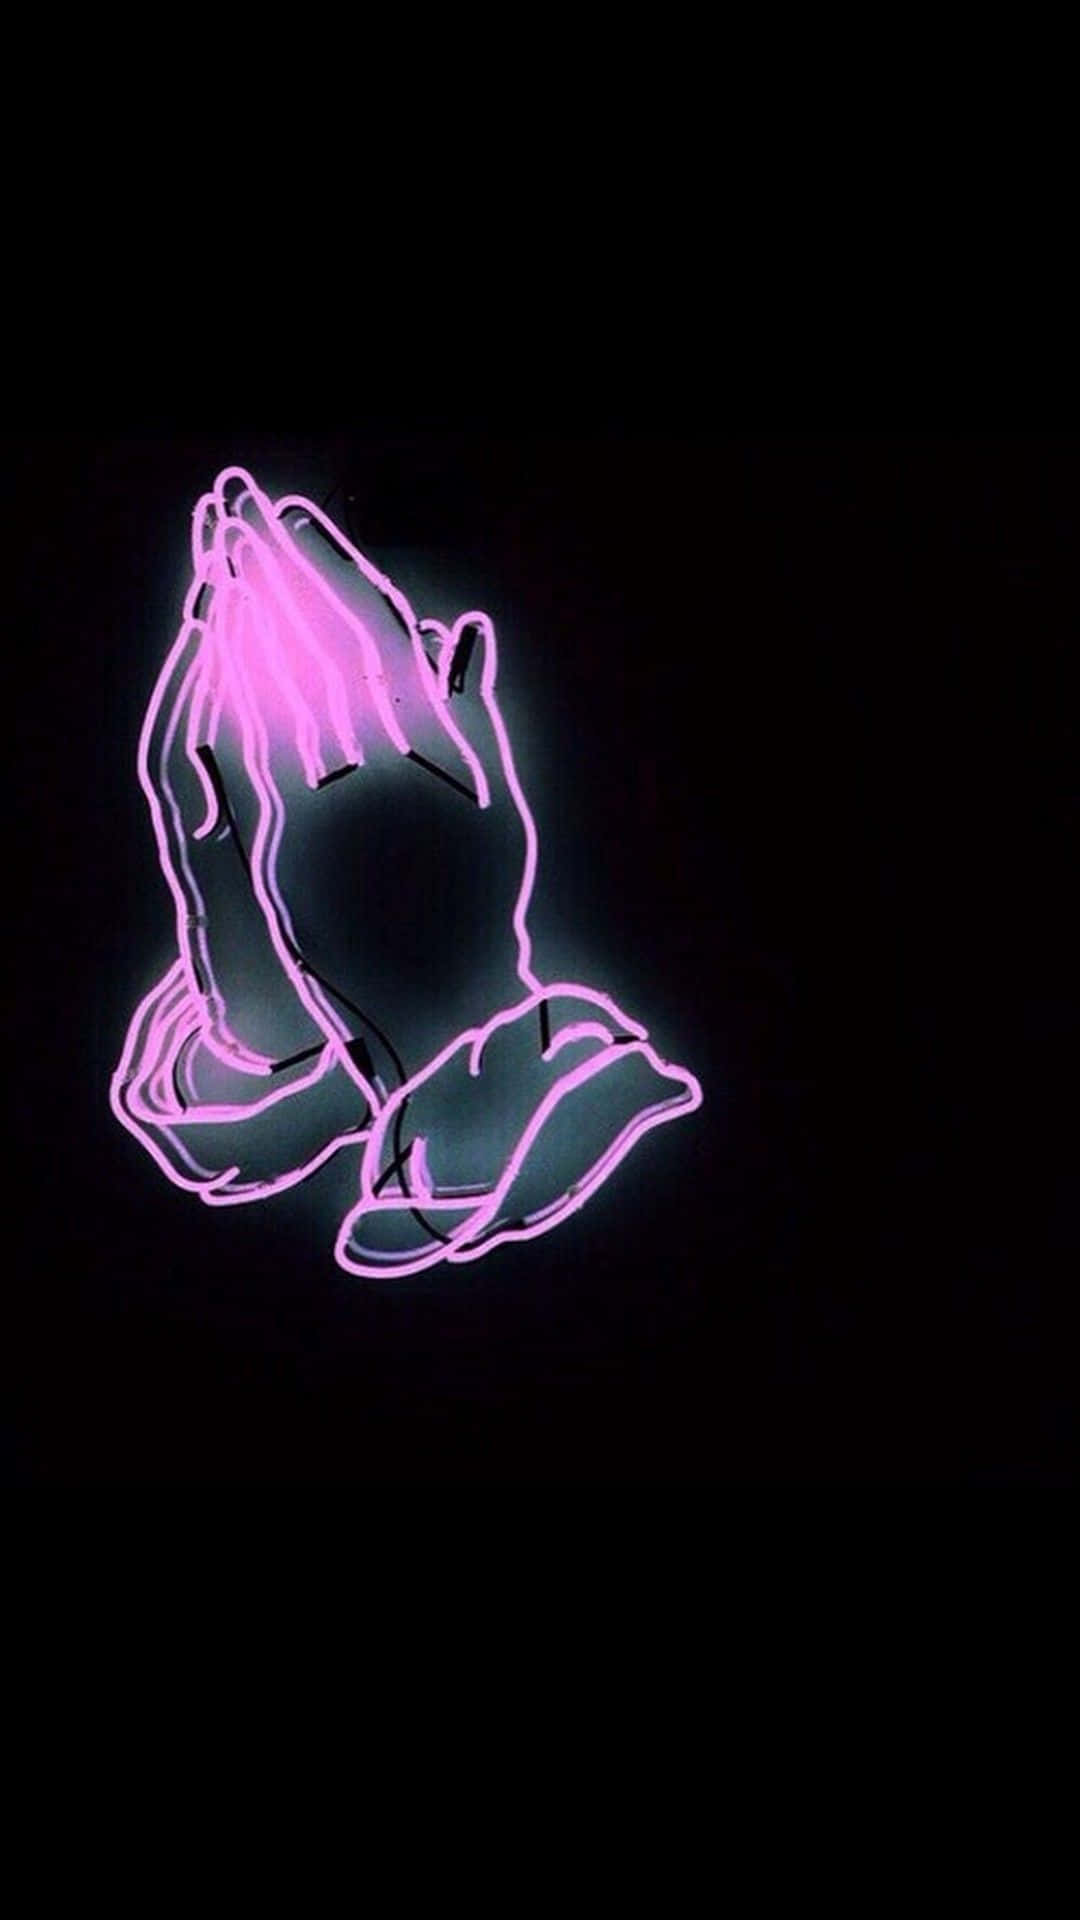 black praying hands background